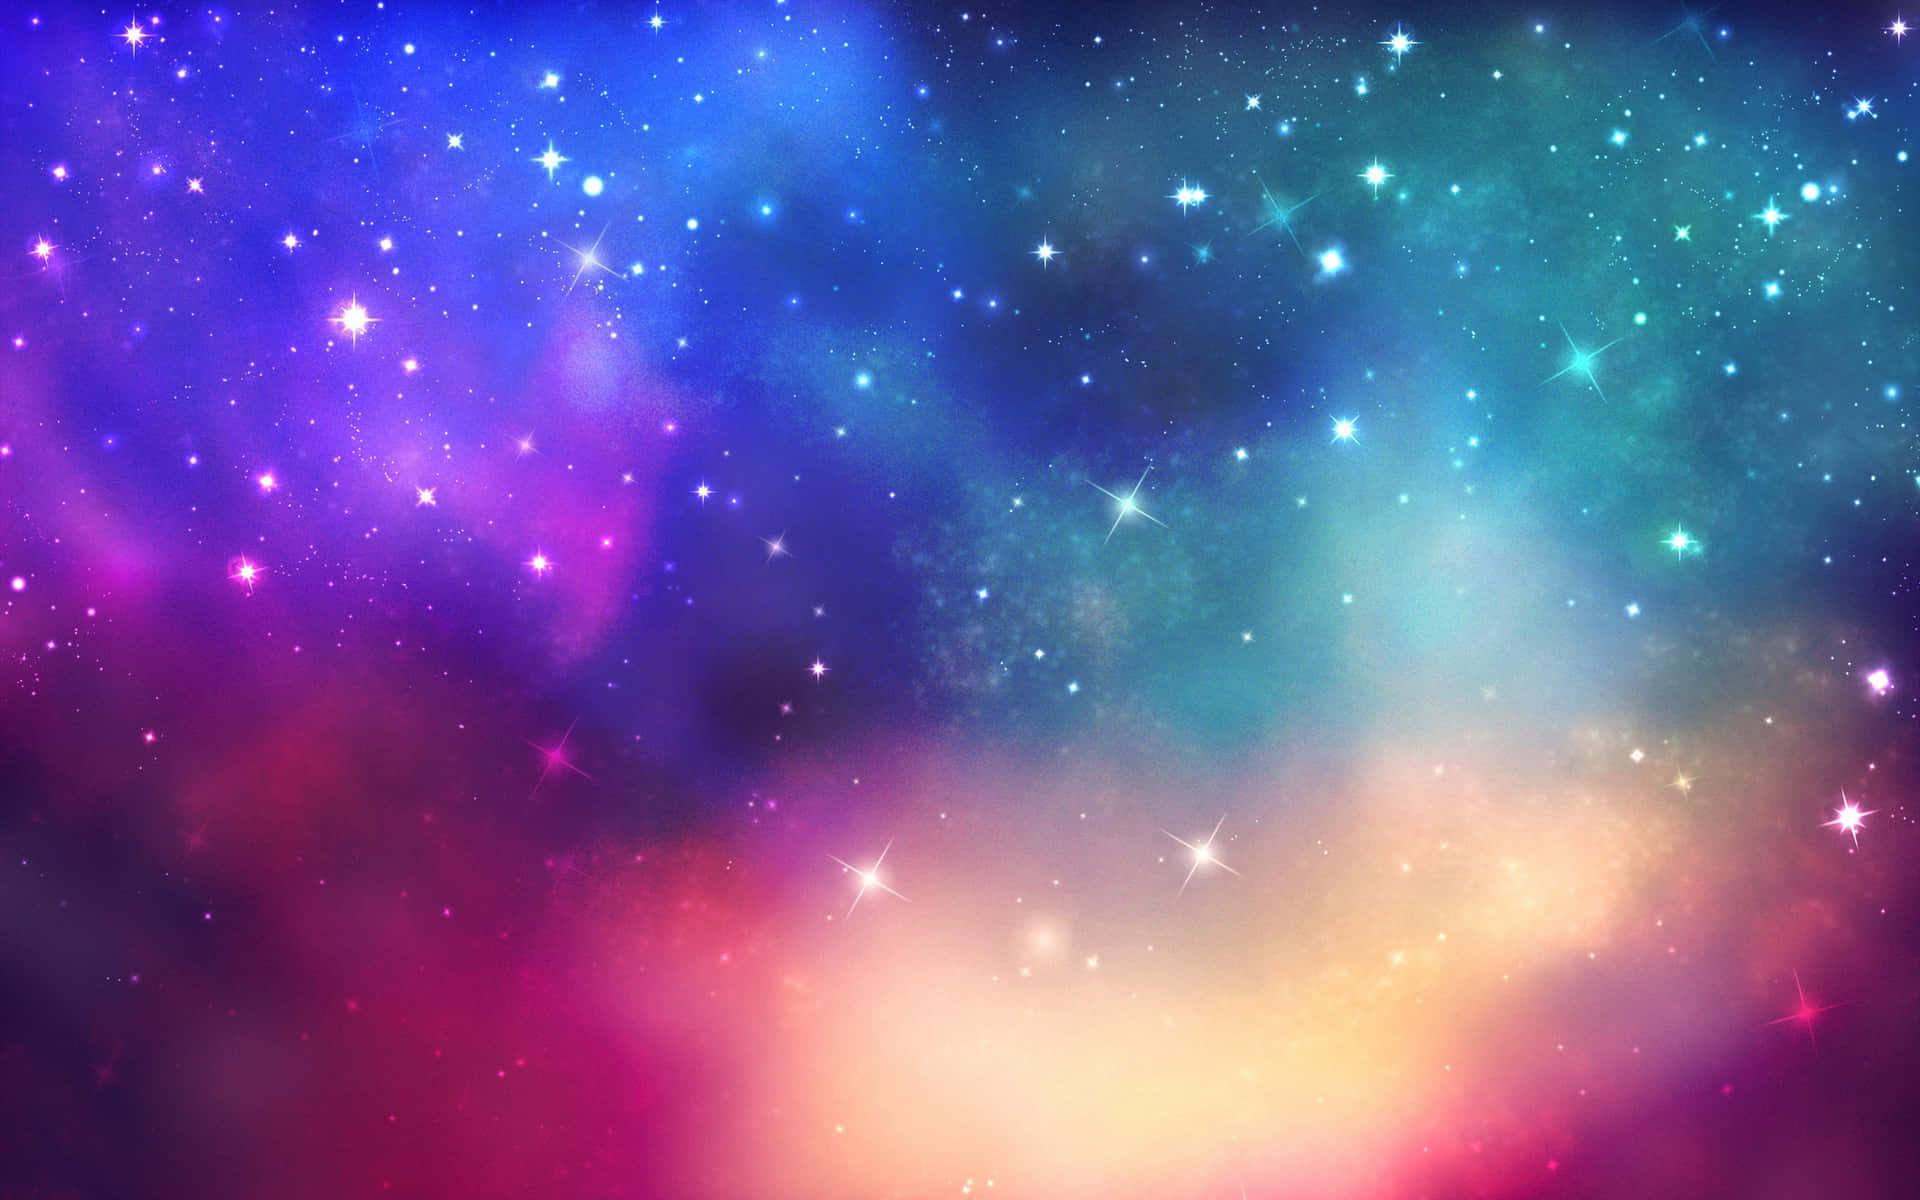 Stunning Galaxy Artwork in Vibrant Colors Wallpaper